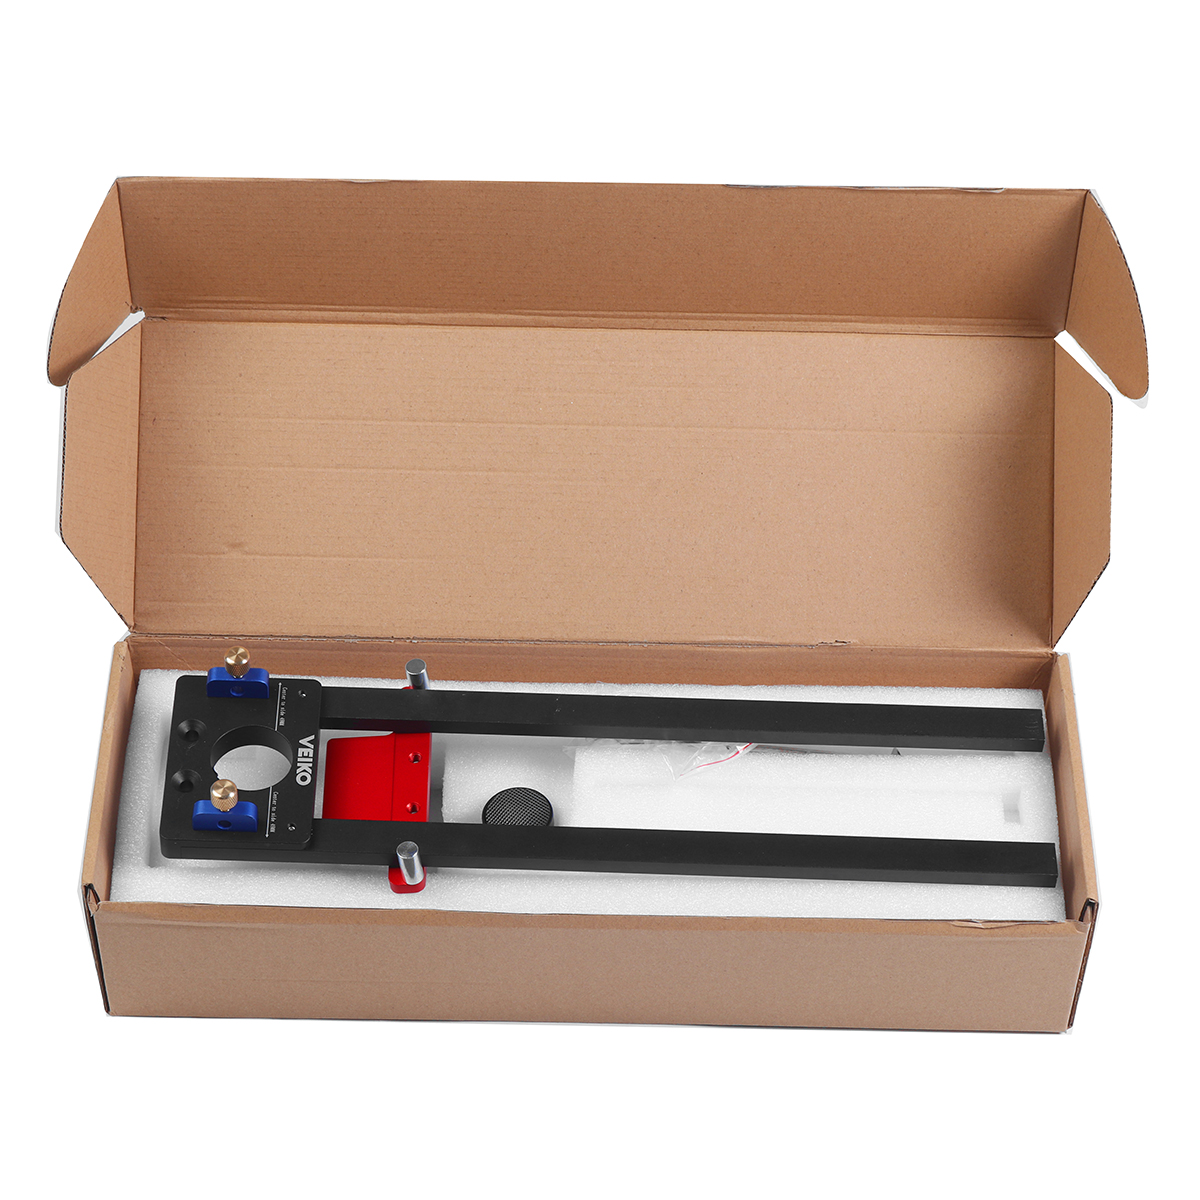 VEIKO-Aluminum-Alloy-Drawer-Slide-Jig-with-Adjustable-Clamp-for-Woodworking-Cabinet-Drawer-Slide-Ins-1911234-11